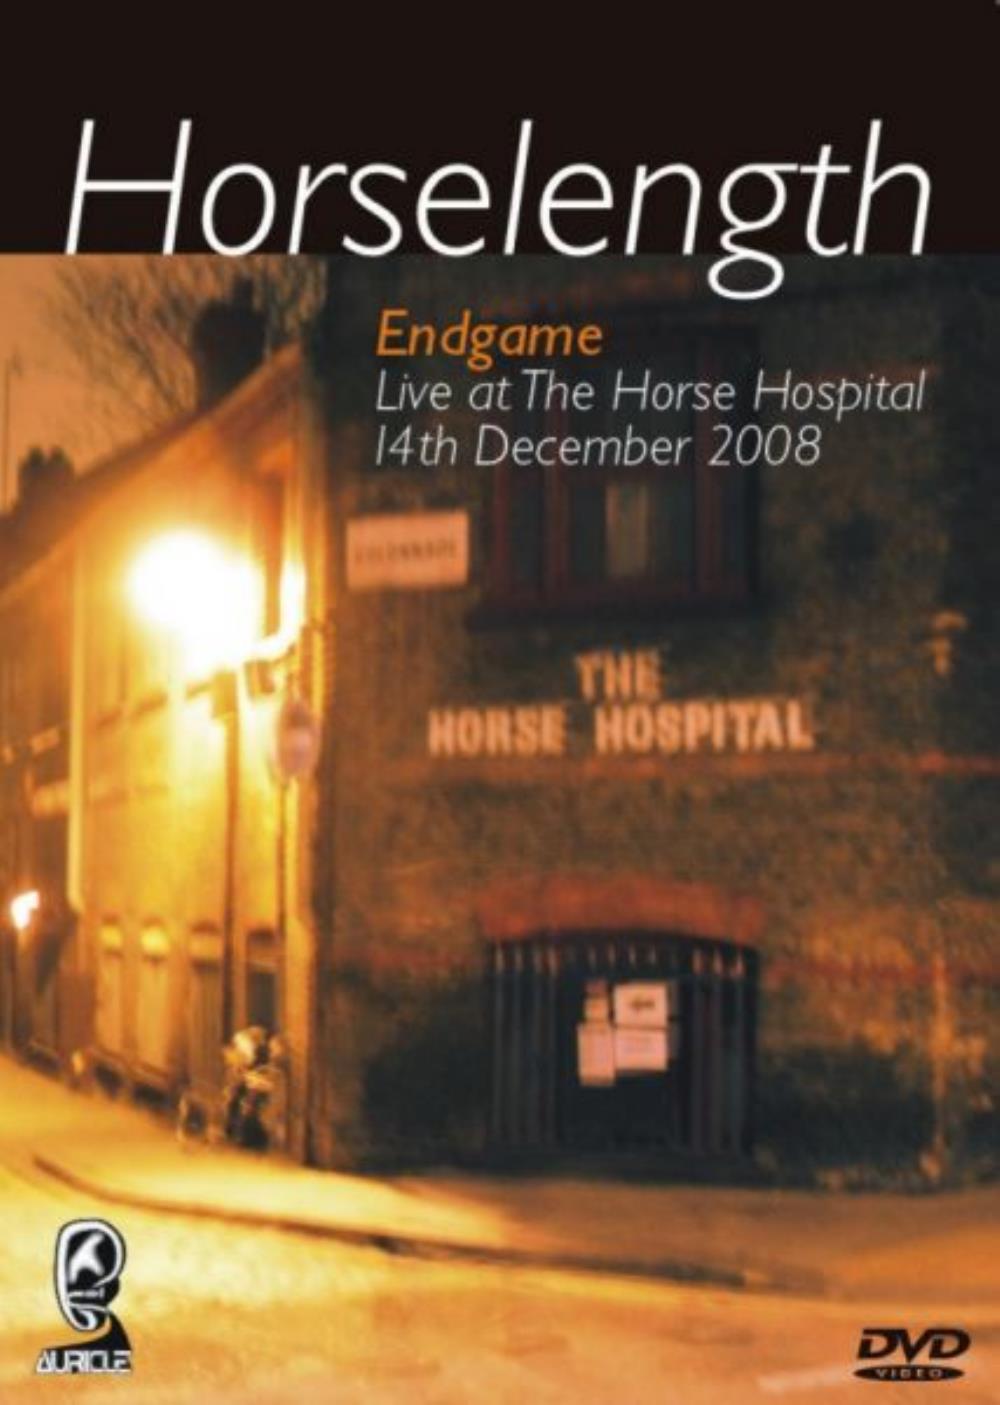 Endgame Horselength: Live at the Horse Hospital album cover